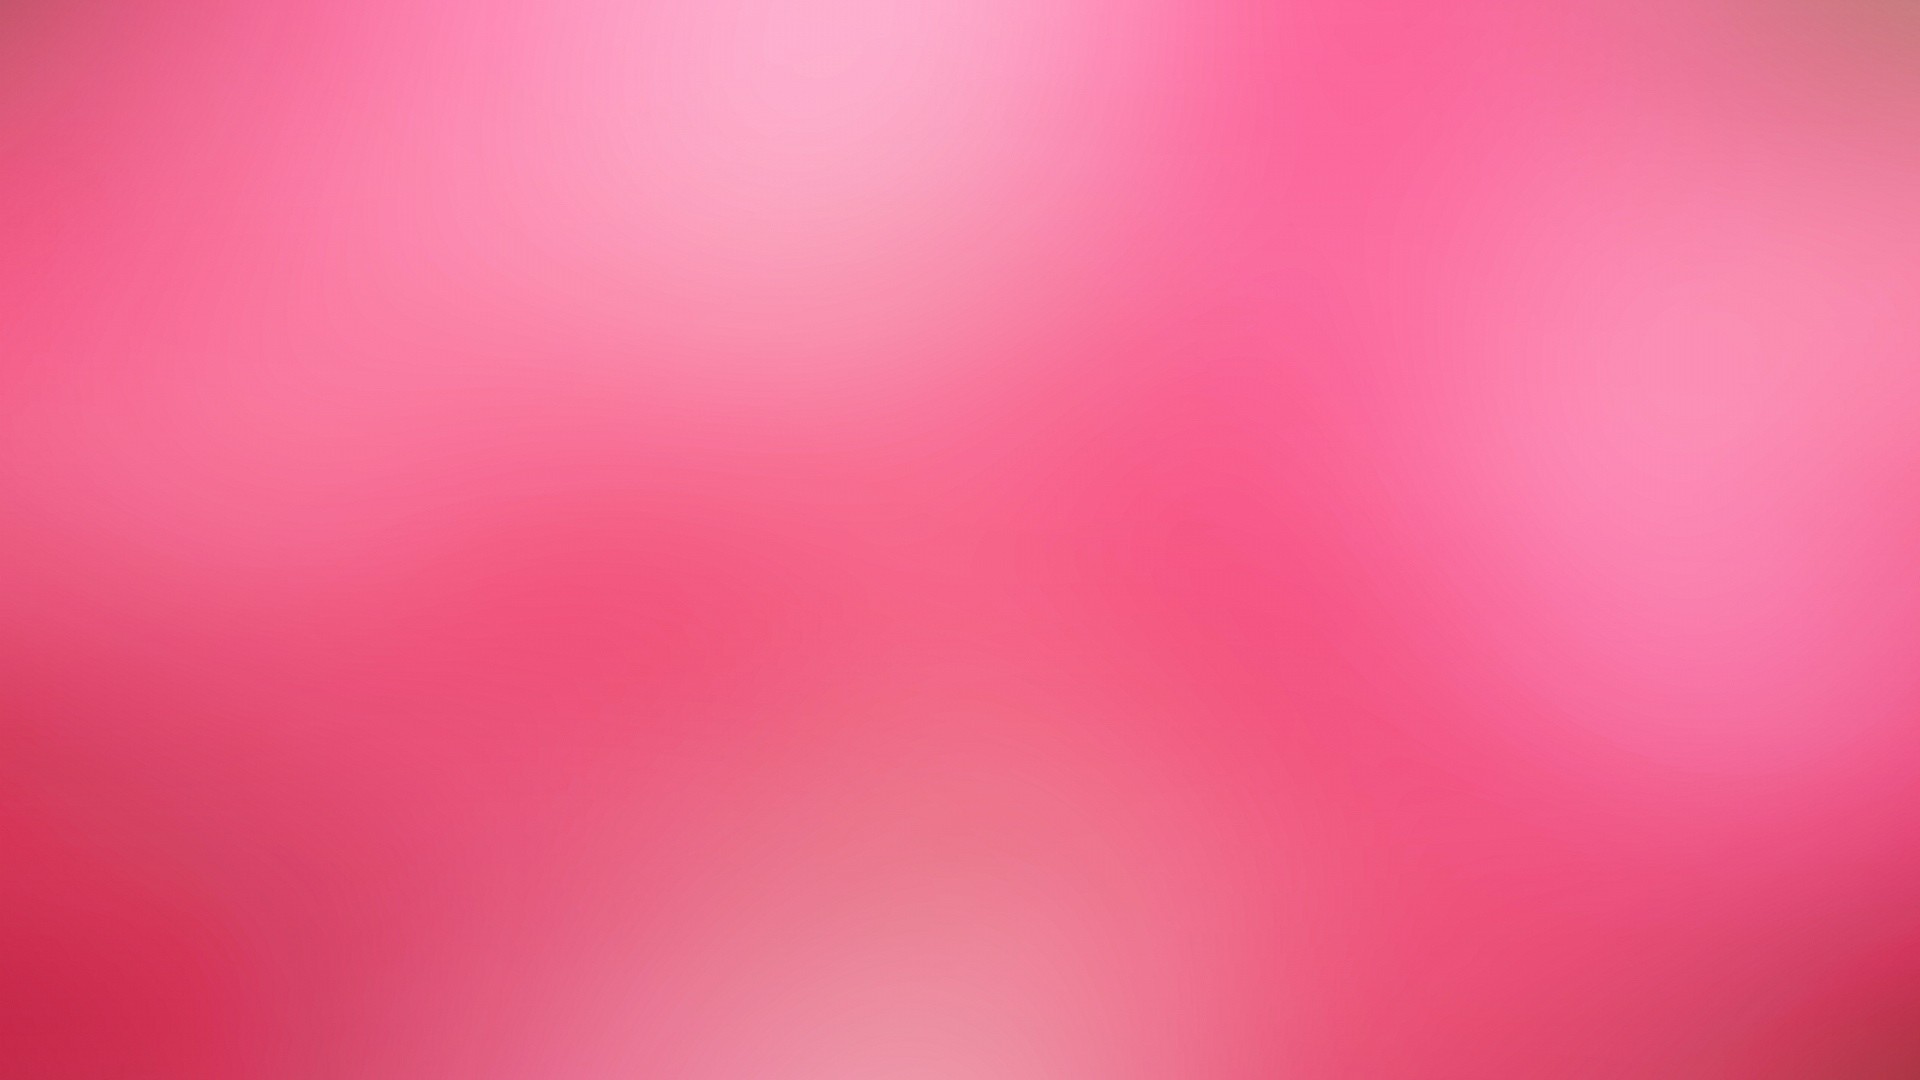 General 1920x1080 pink texture pink background